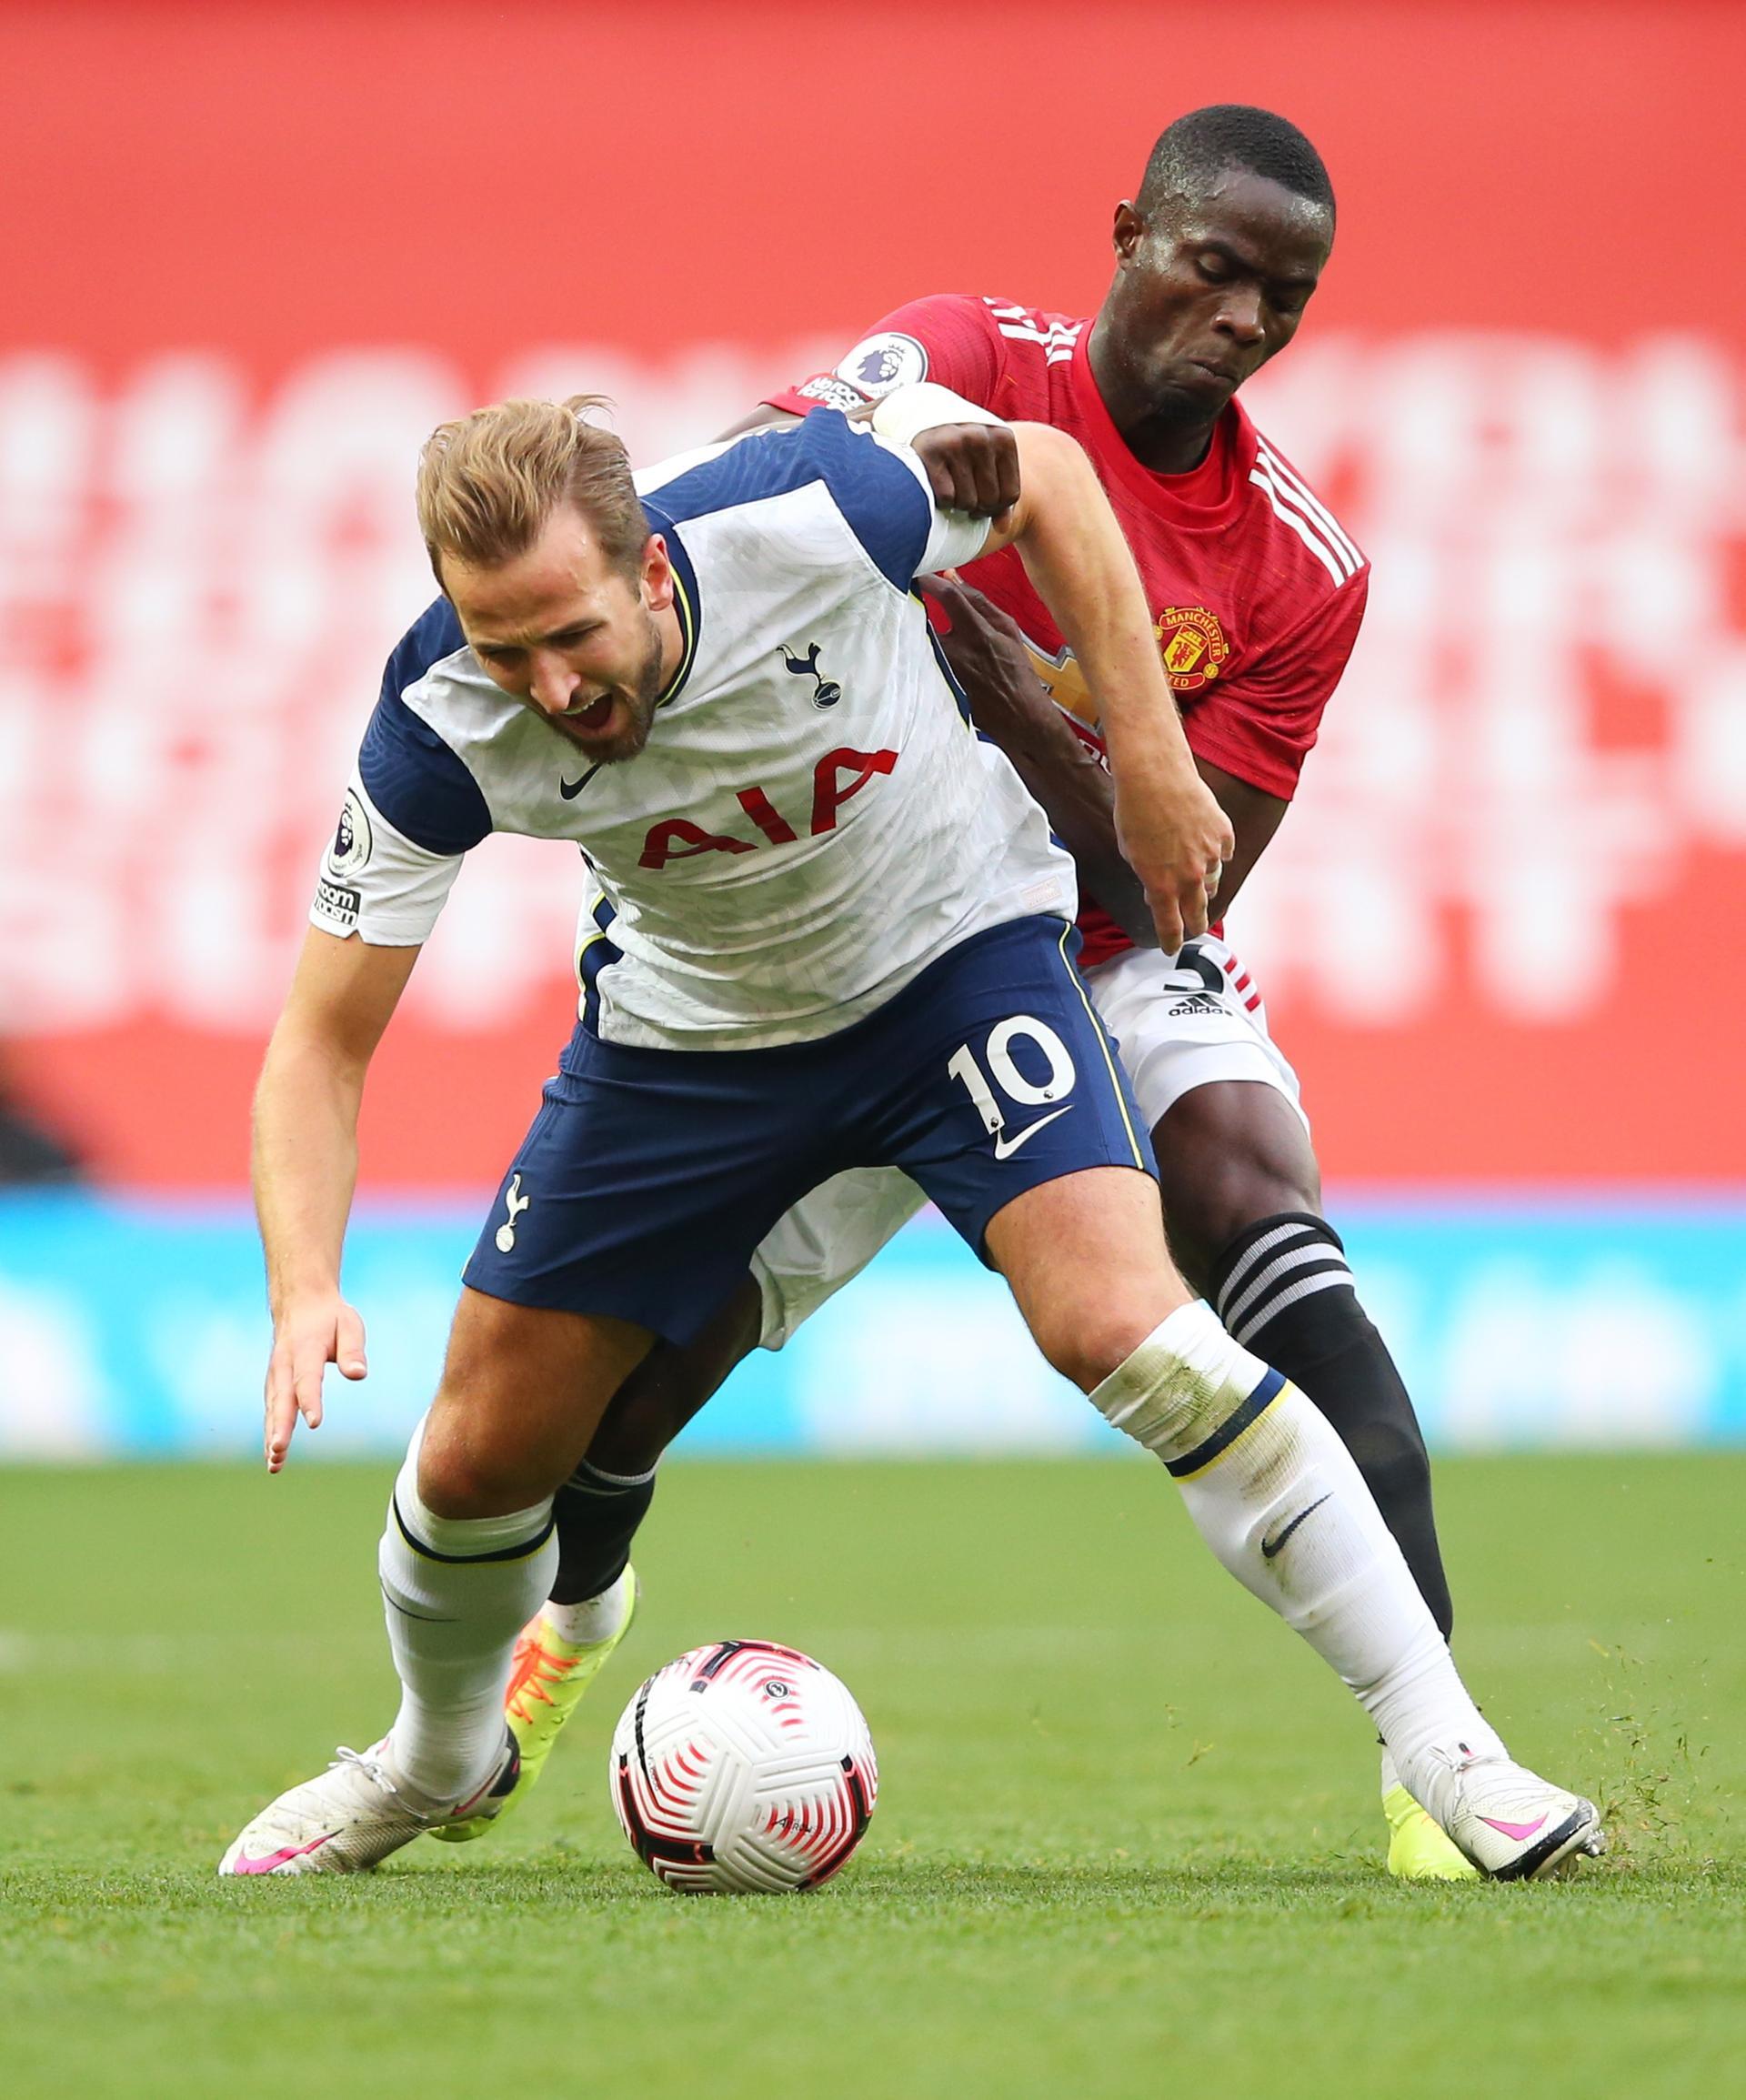 Sheffield United vs Tottenham highlights as Aurier, Kane and